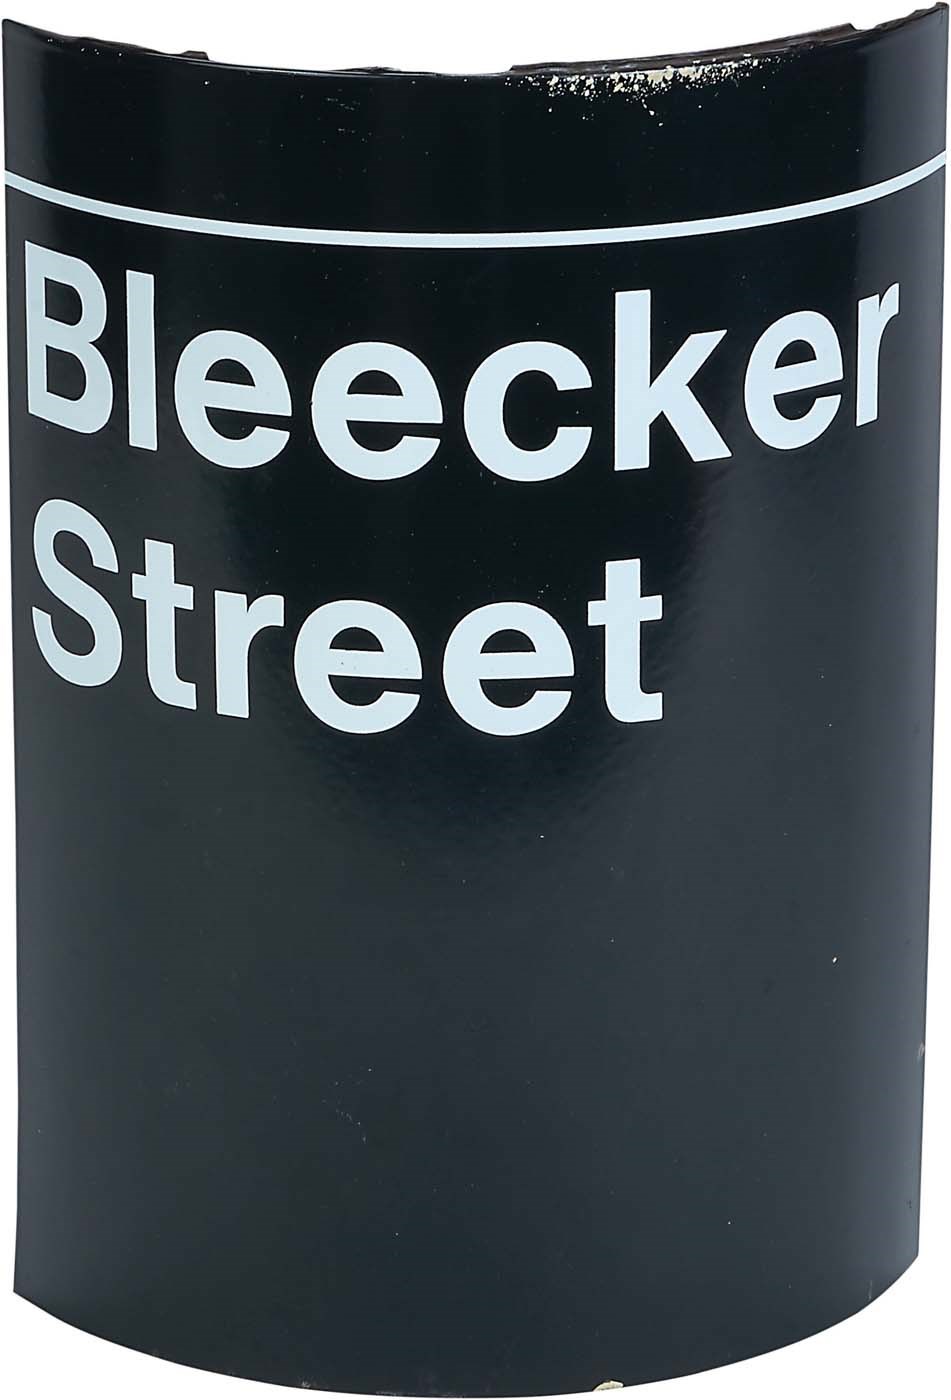 Rock 'N' Roll - "Bleeker Street" Black Porcelain New York City Subway Sign